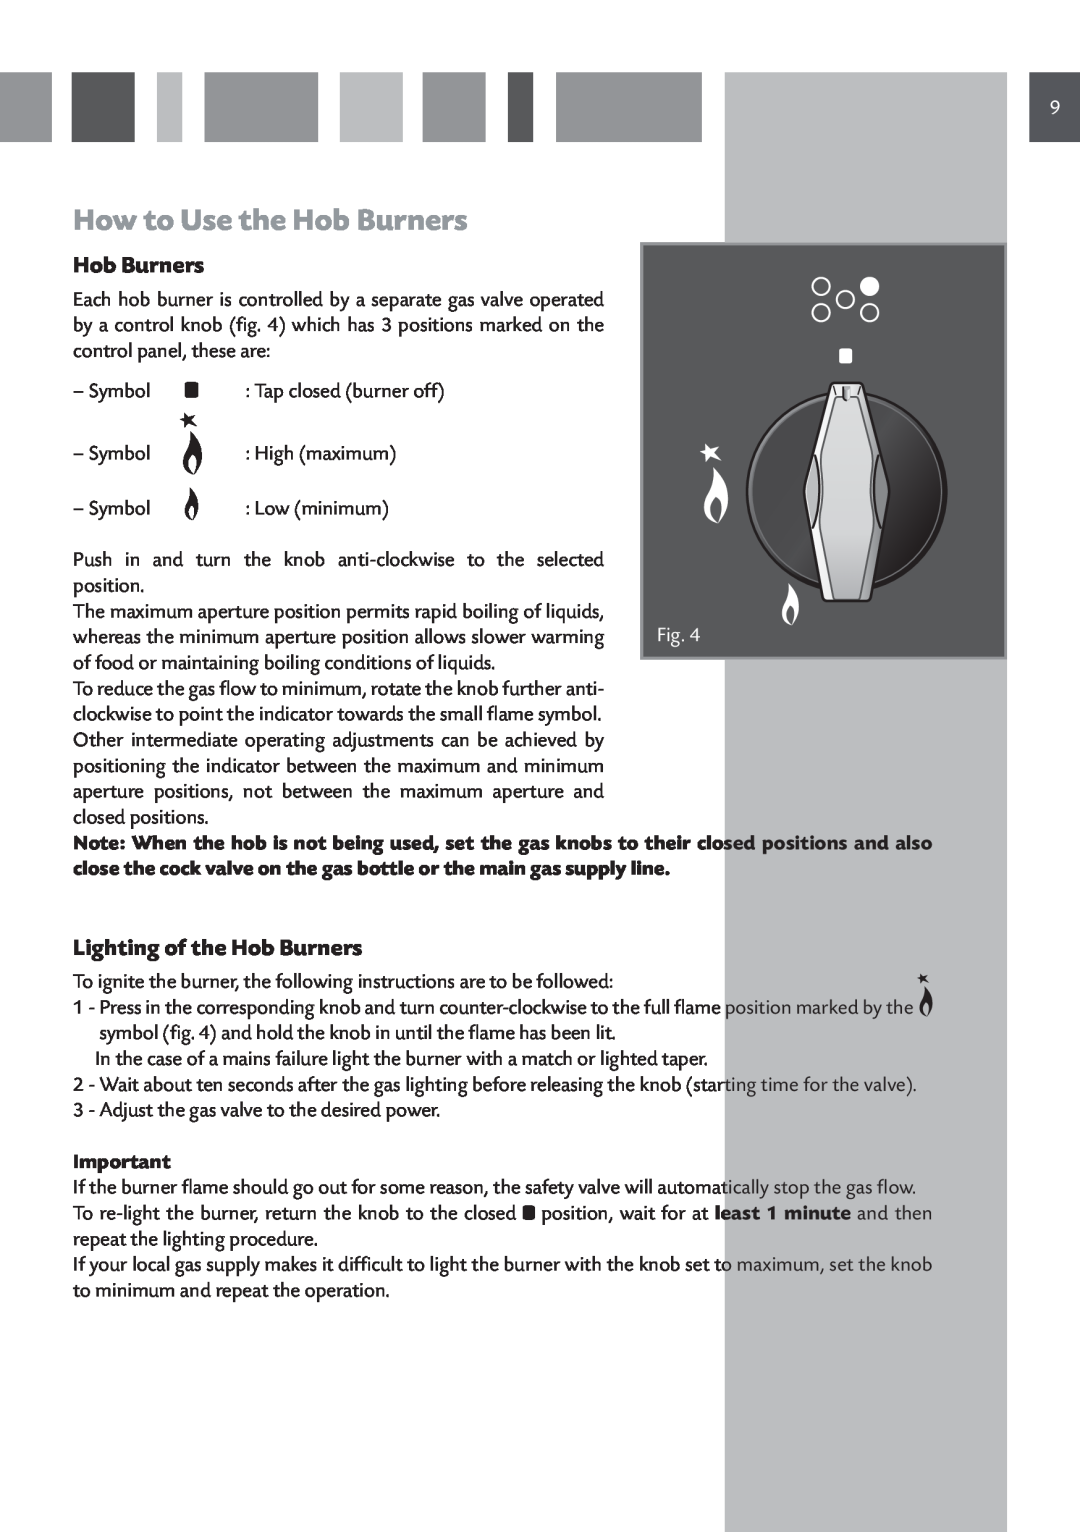 CDA RV 1001, RV 901 manual How to Use the Hob Burners, Lighting of the Hob Burners 